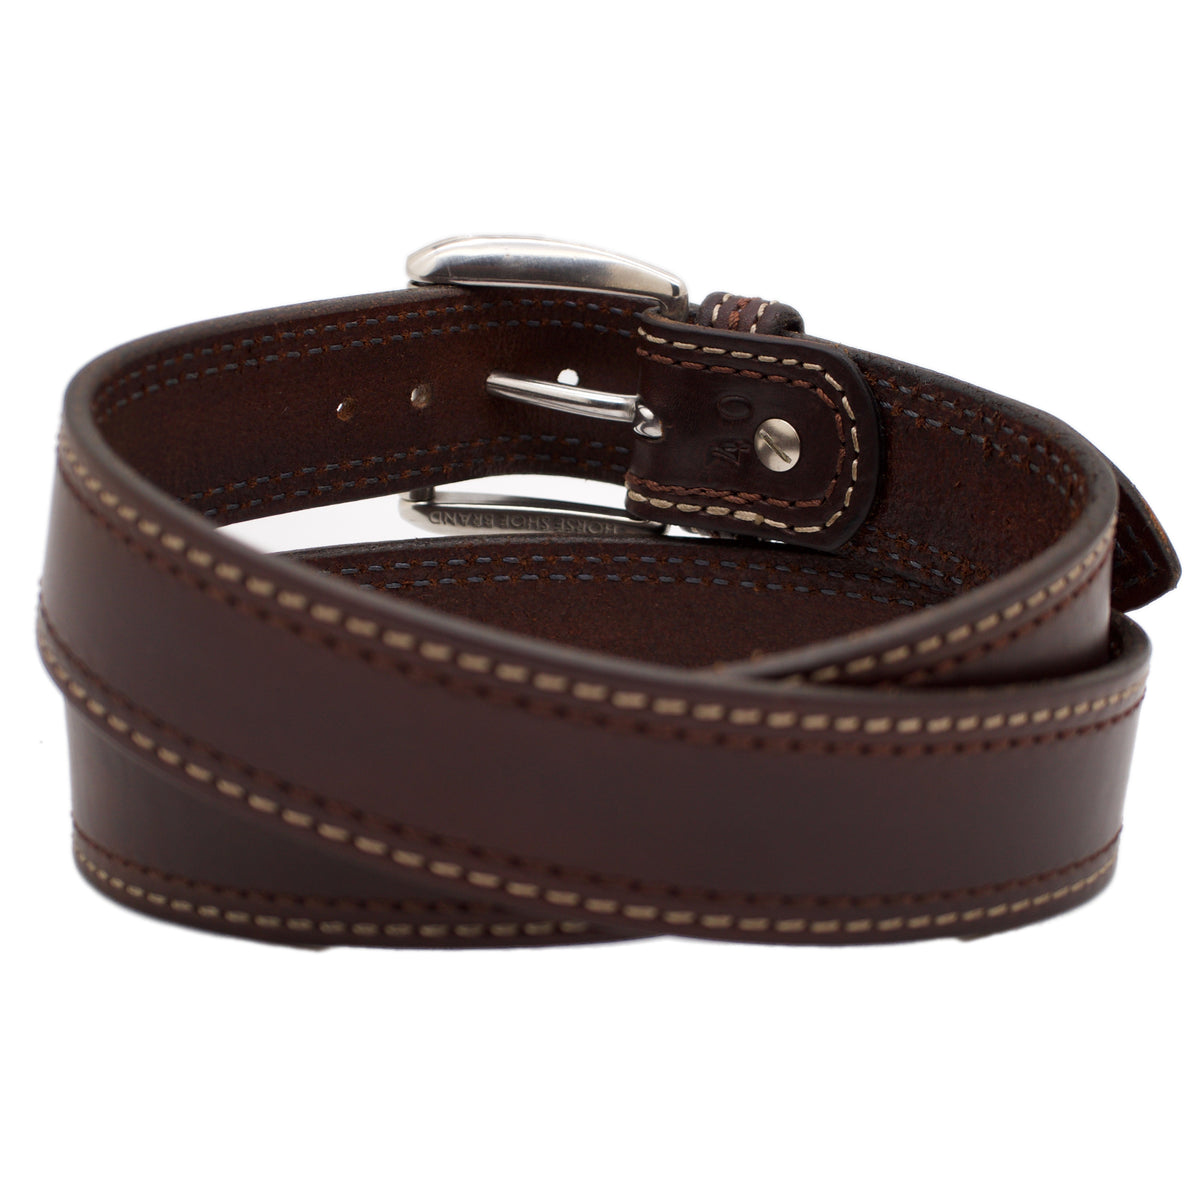 The LEXINGTON WIDE 1.75 Leather Belt